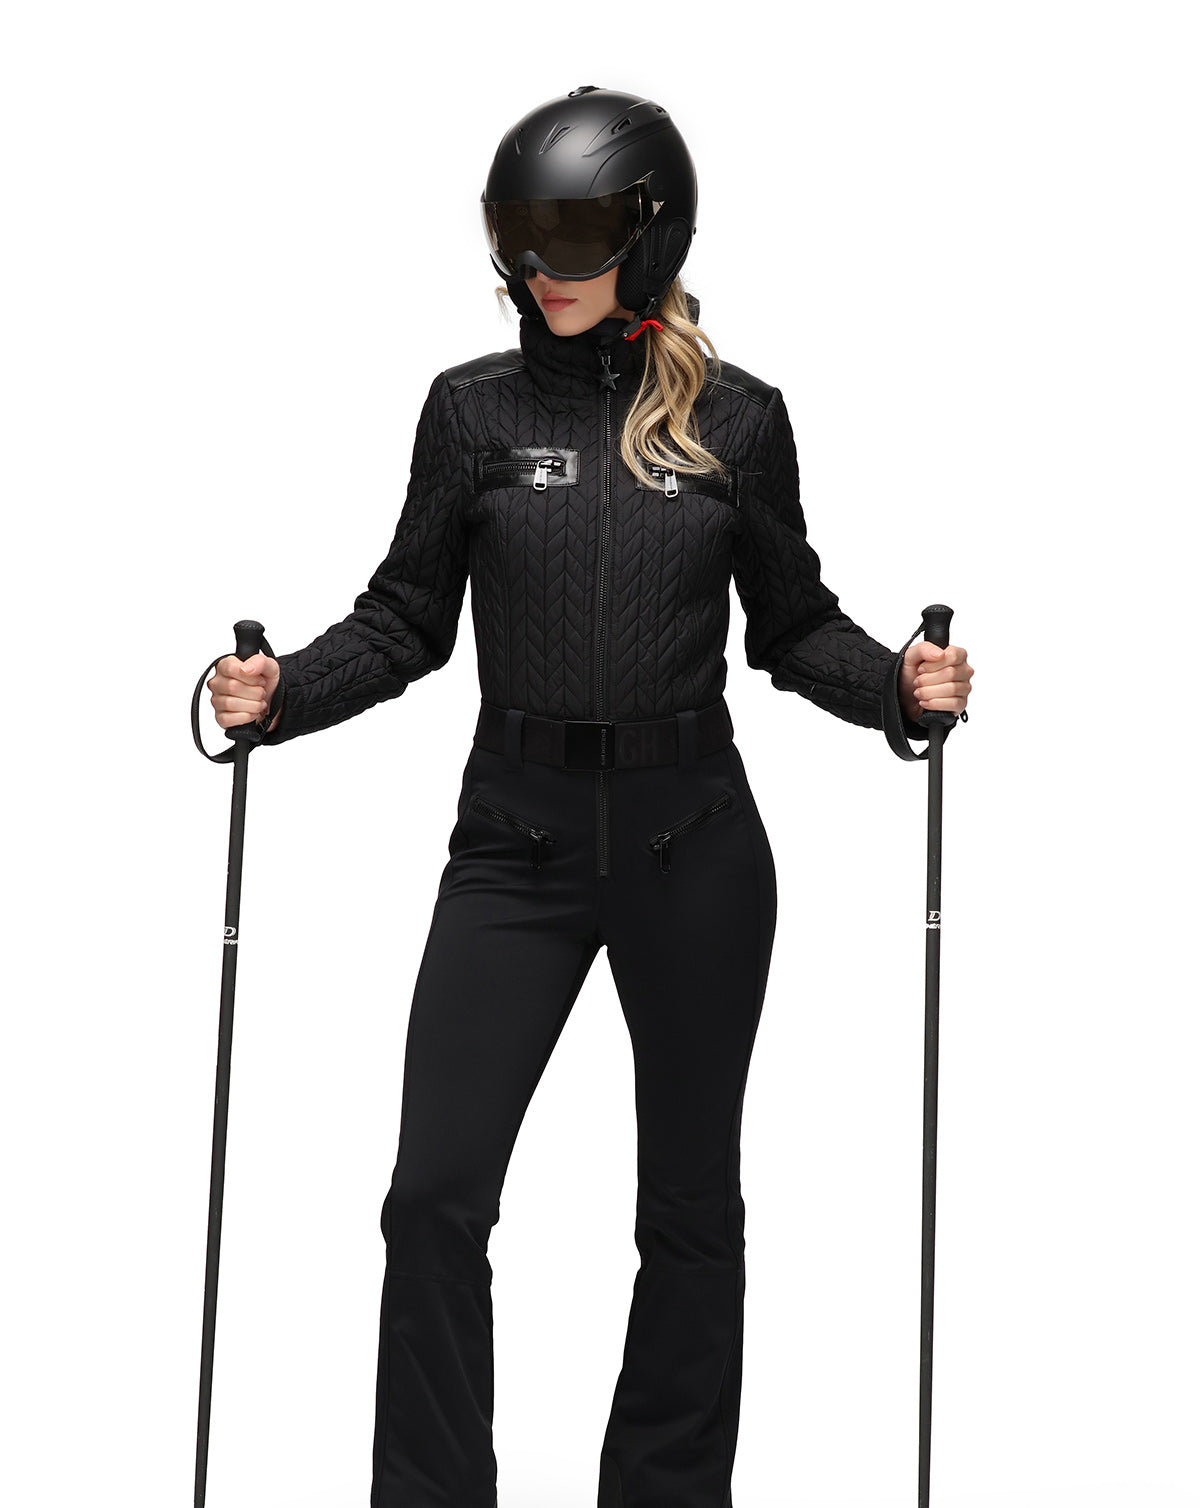 Goldbergh Vision All in One Ski Suit in Black